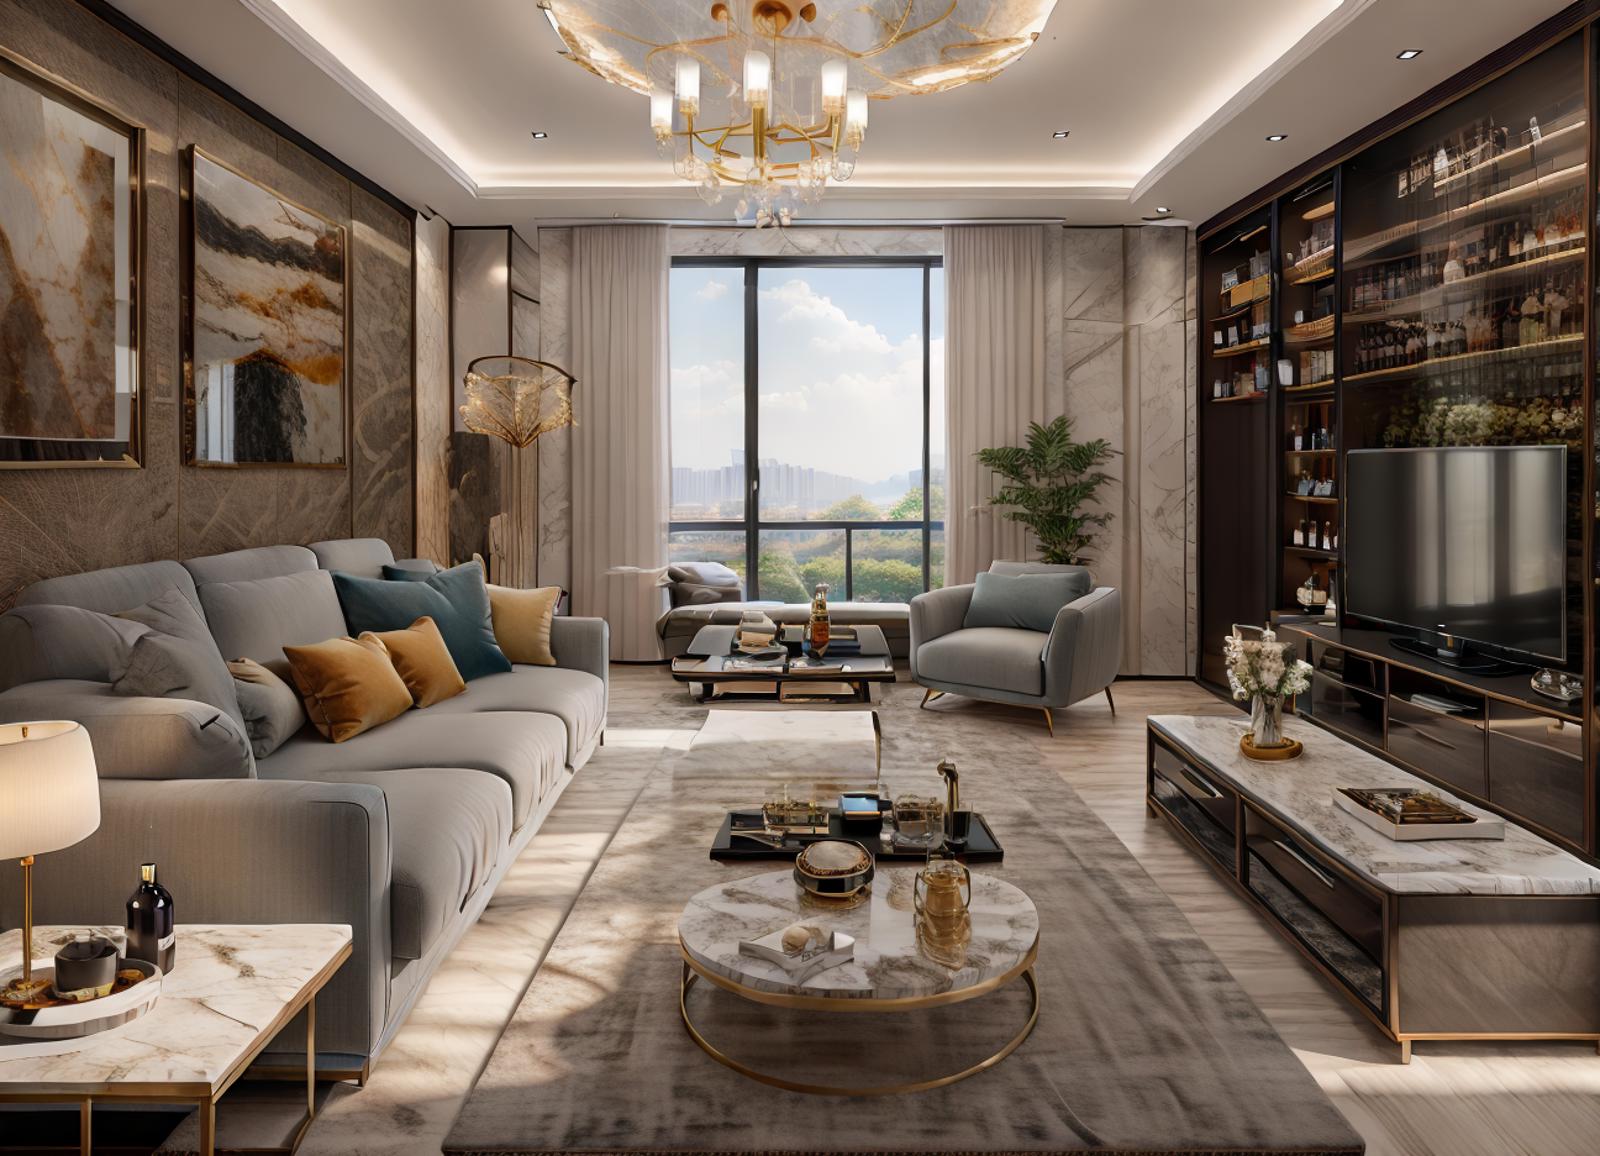 Modern luxury living room image by Hakhoa0901